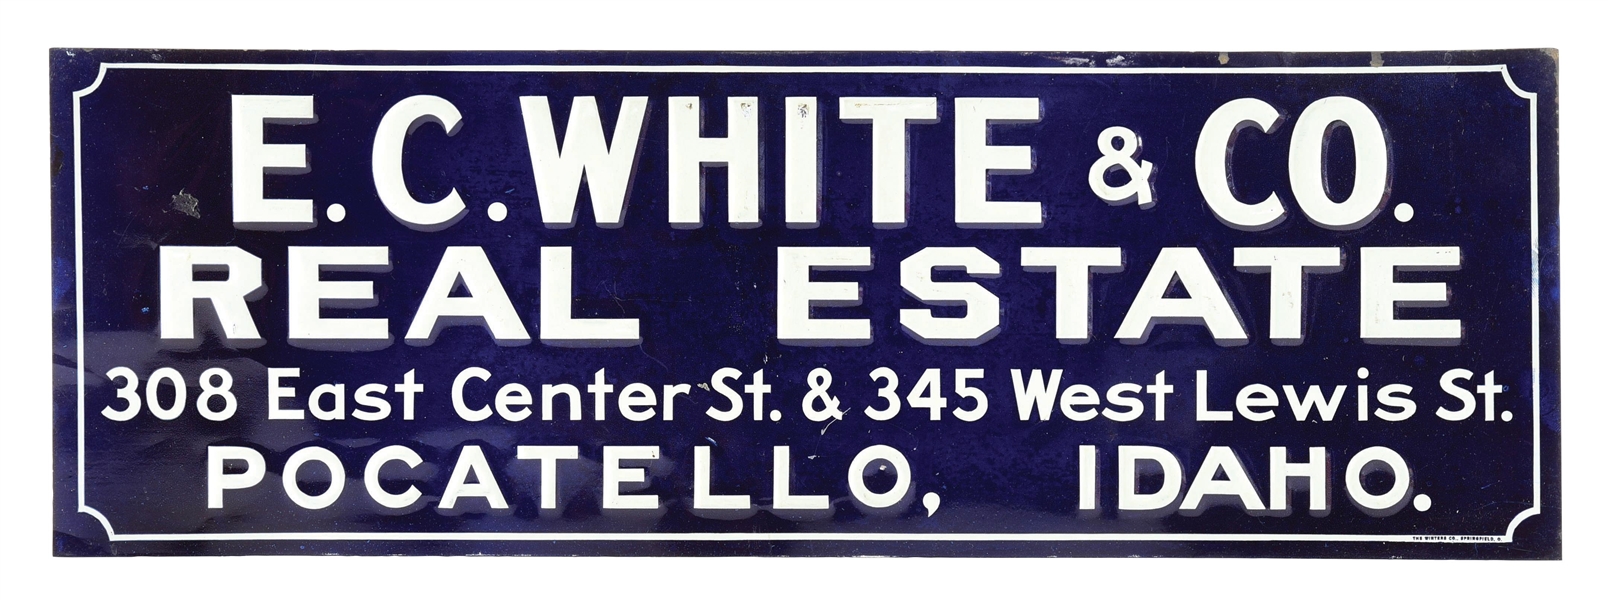 E.C. WHITE & CO. REAL ESTATE EMBOSSED TIN SIGN. 